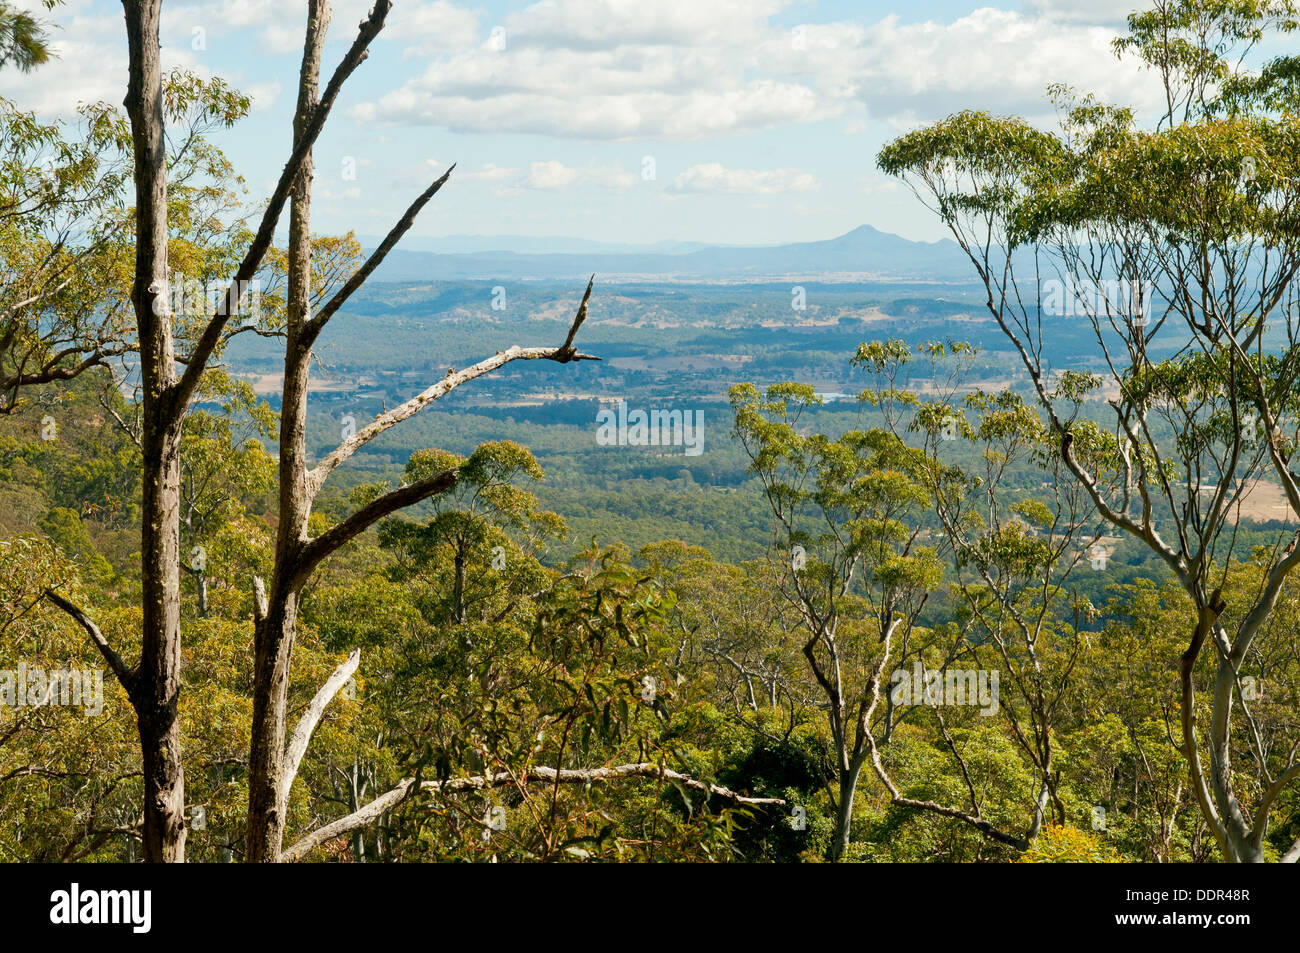 View from the Knoll, Mt Tamborine, Queensland, Australia Stock Photo